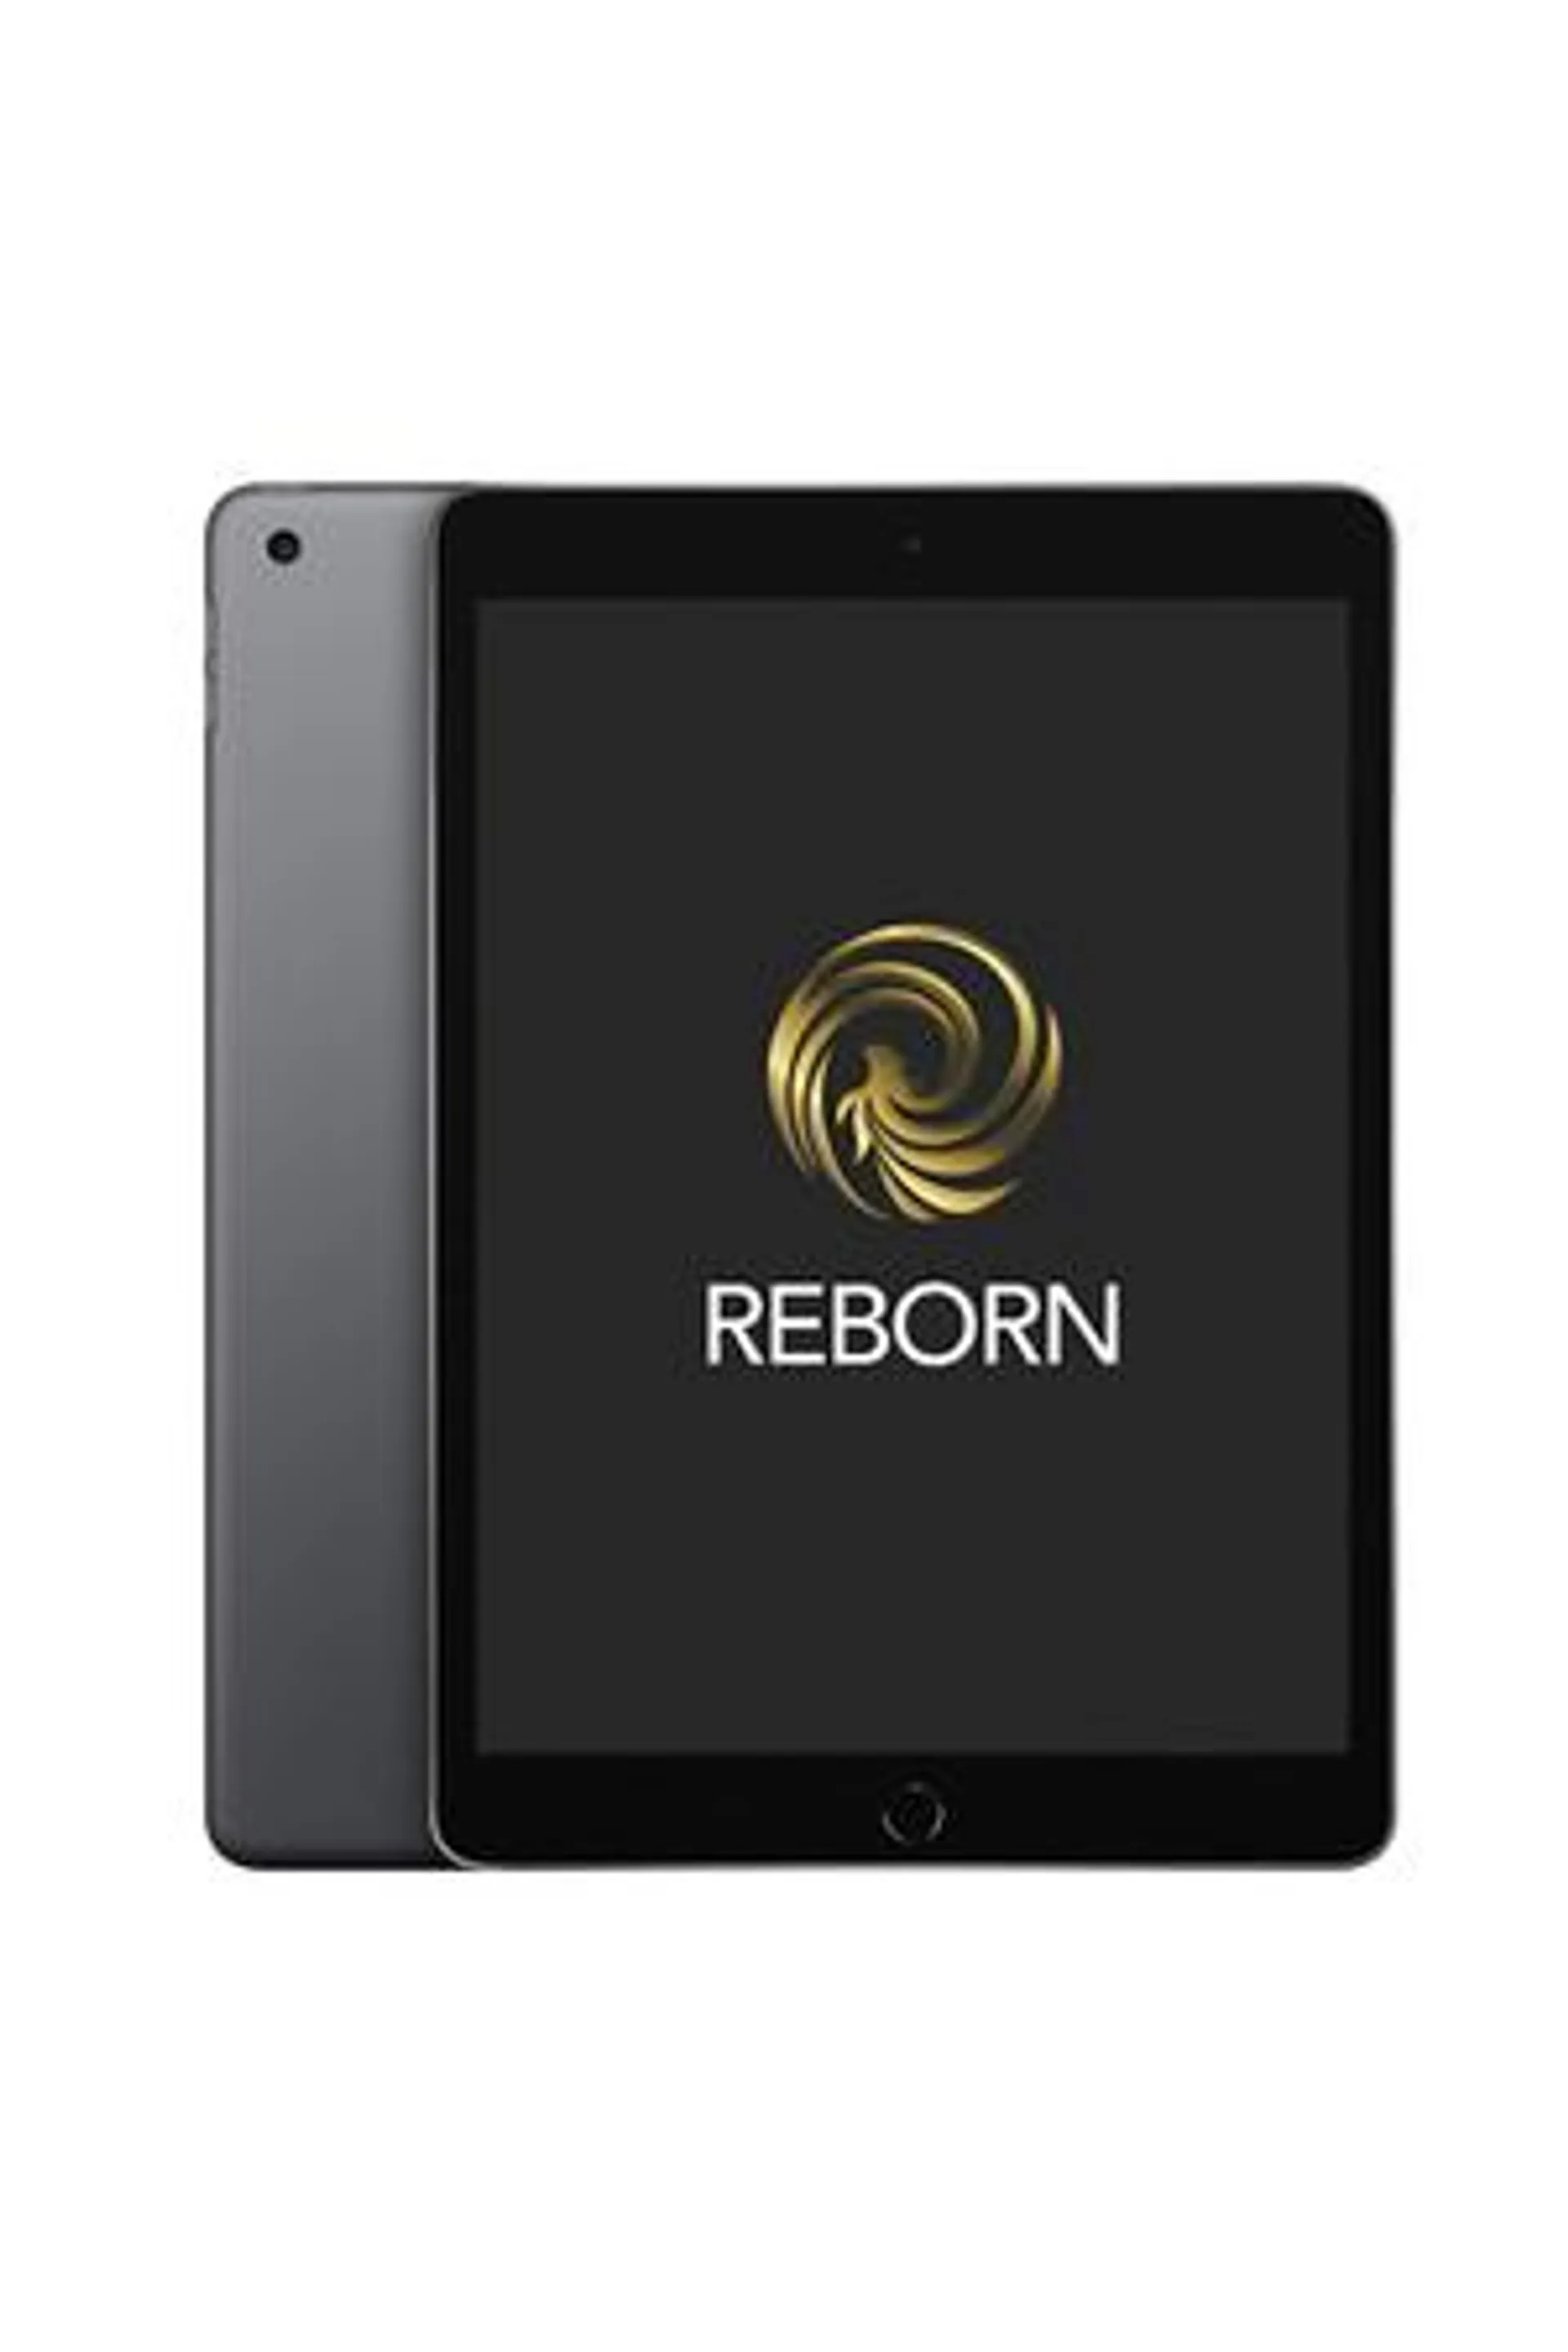 Reborn iPad 6 32 Go Wifi Gris sidéral reconditionné par Reborn